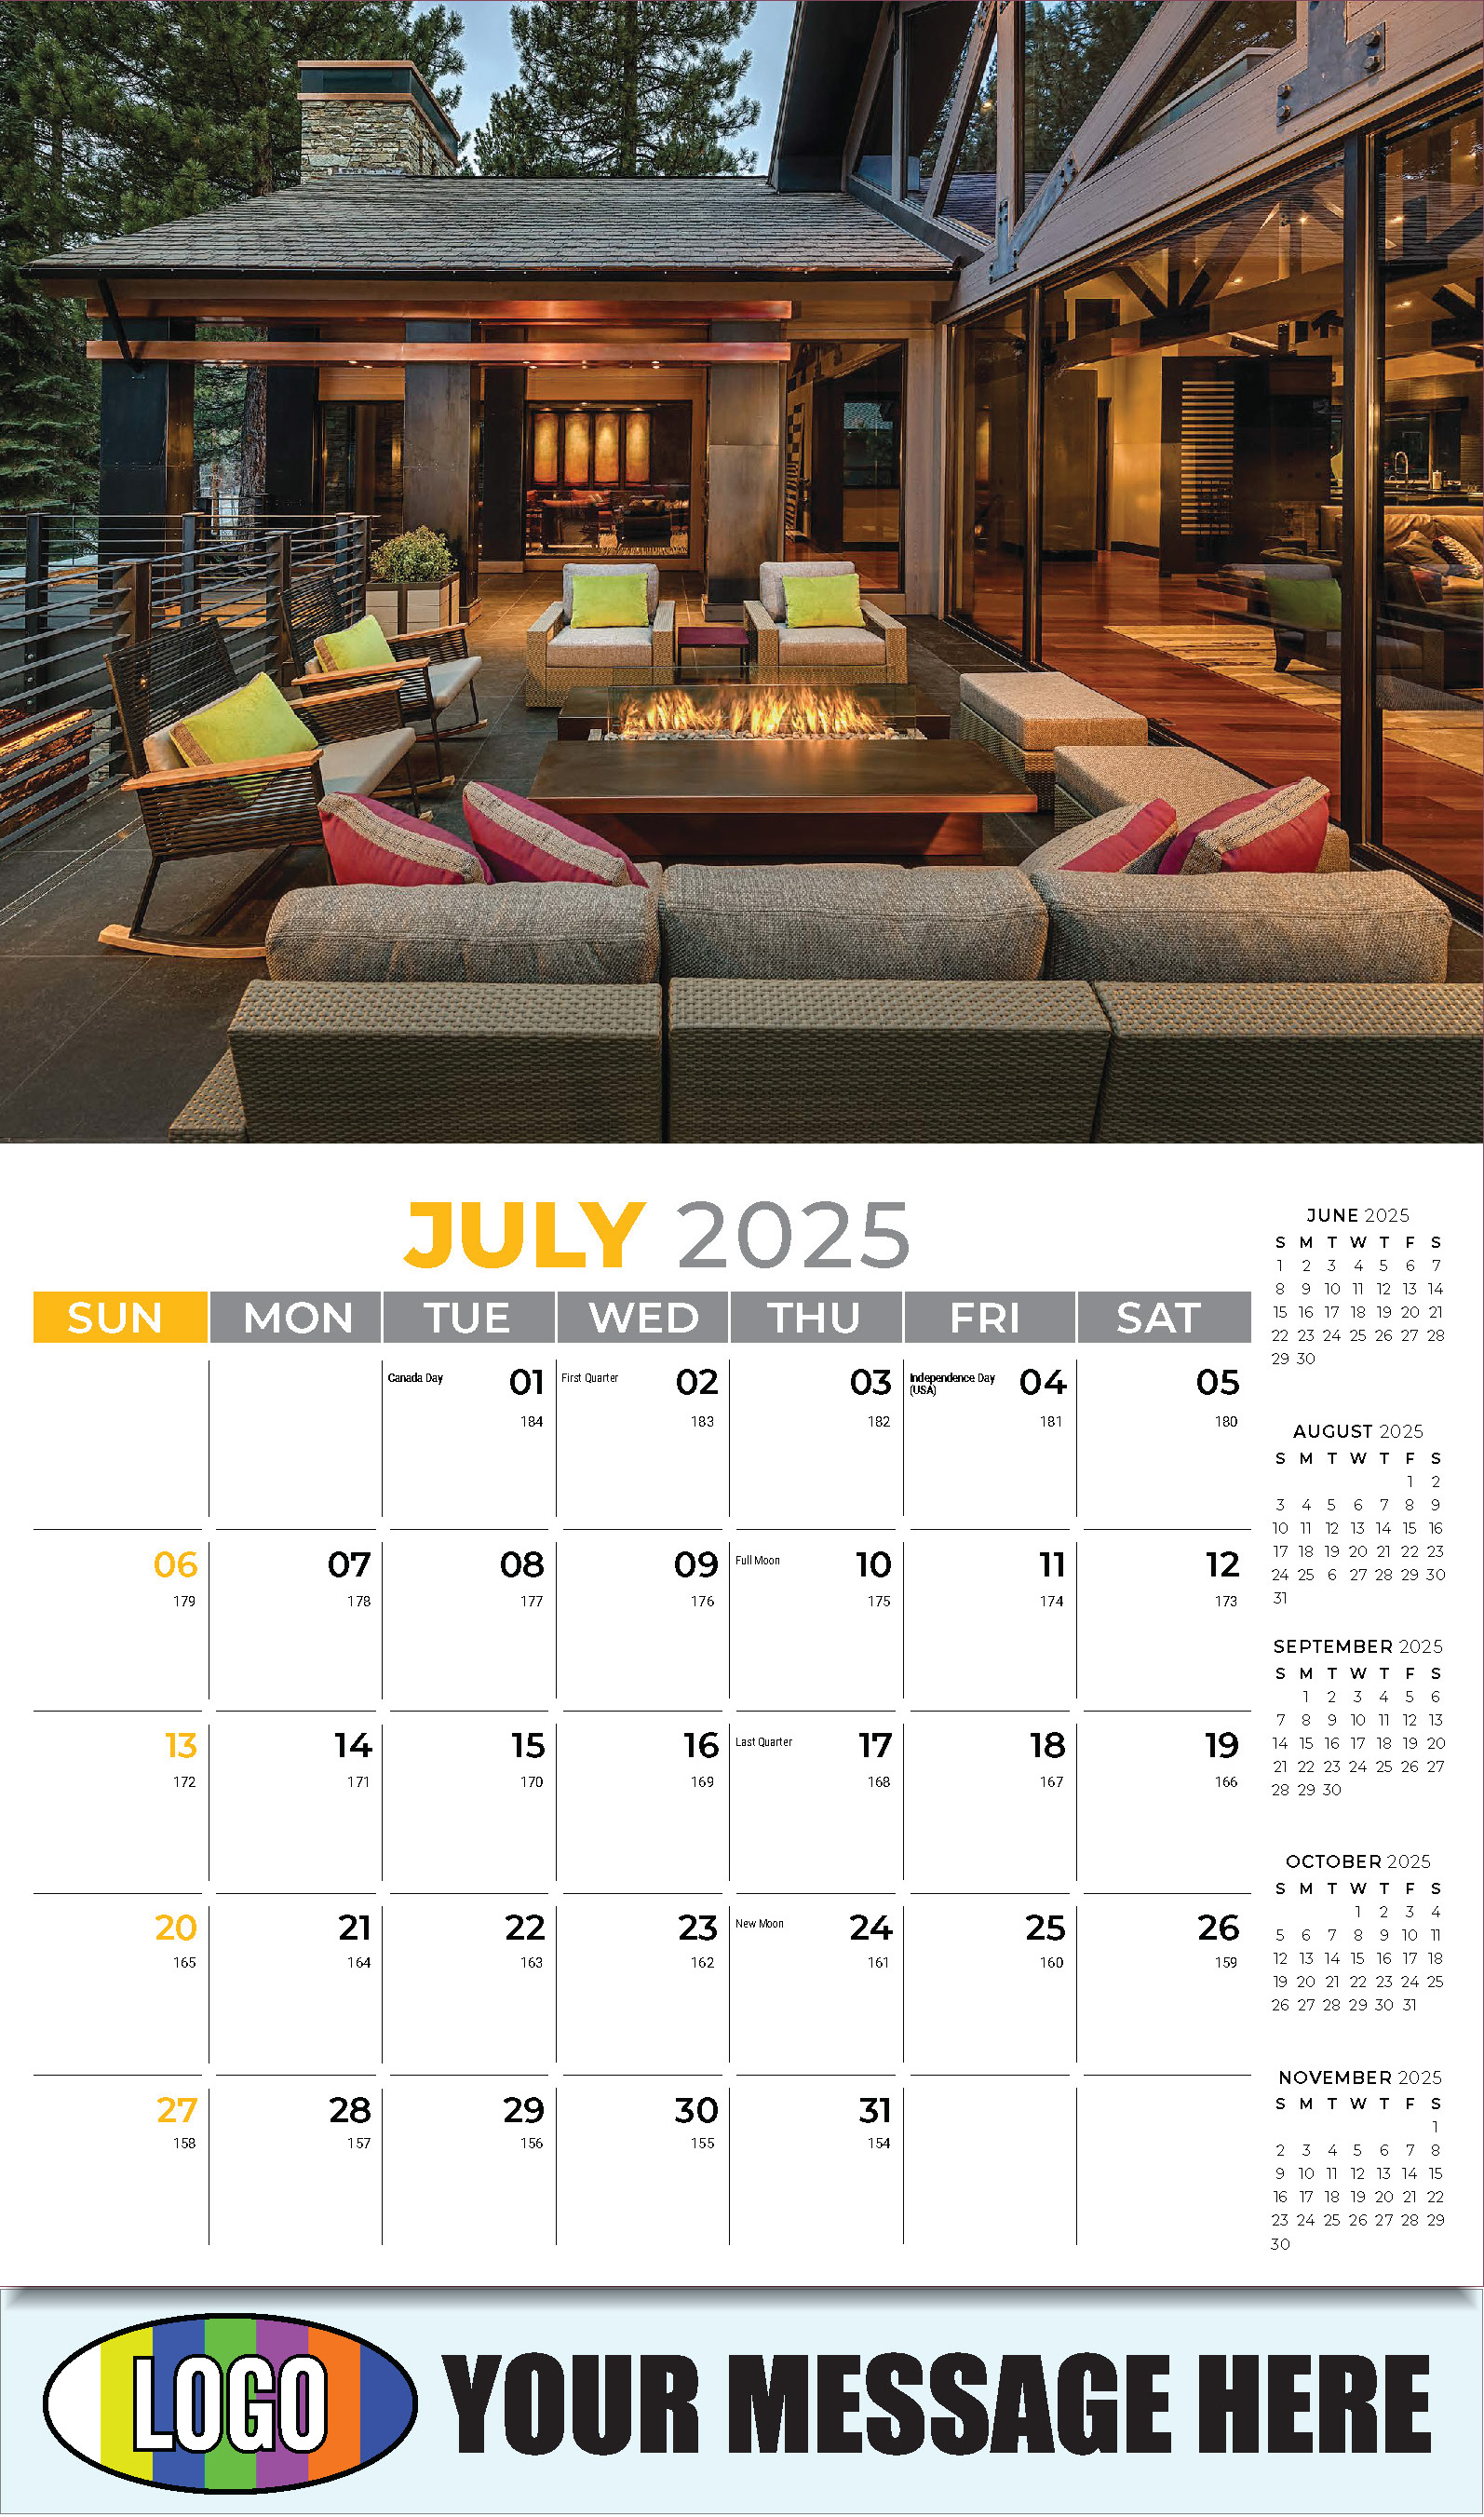 Decor and Design 2025 Interior Design Business Promotional Calendar - July